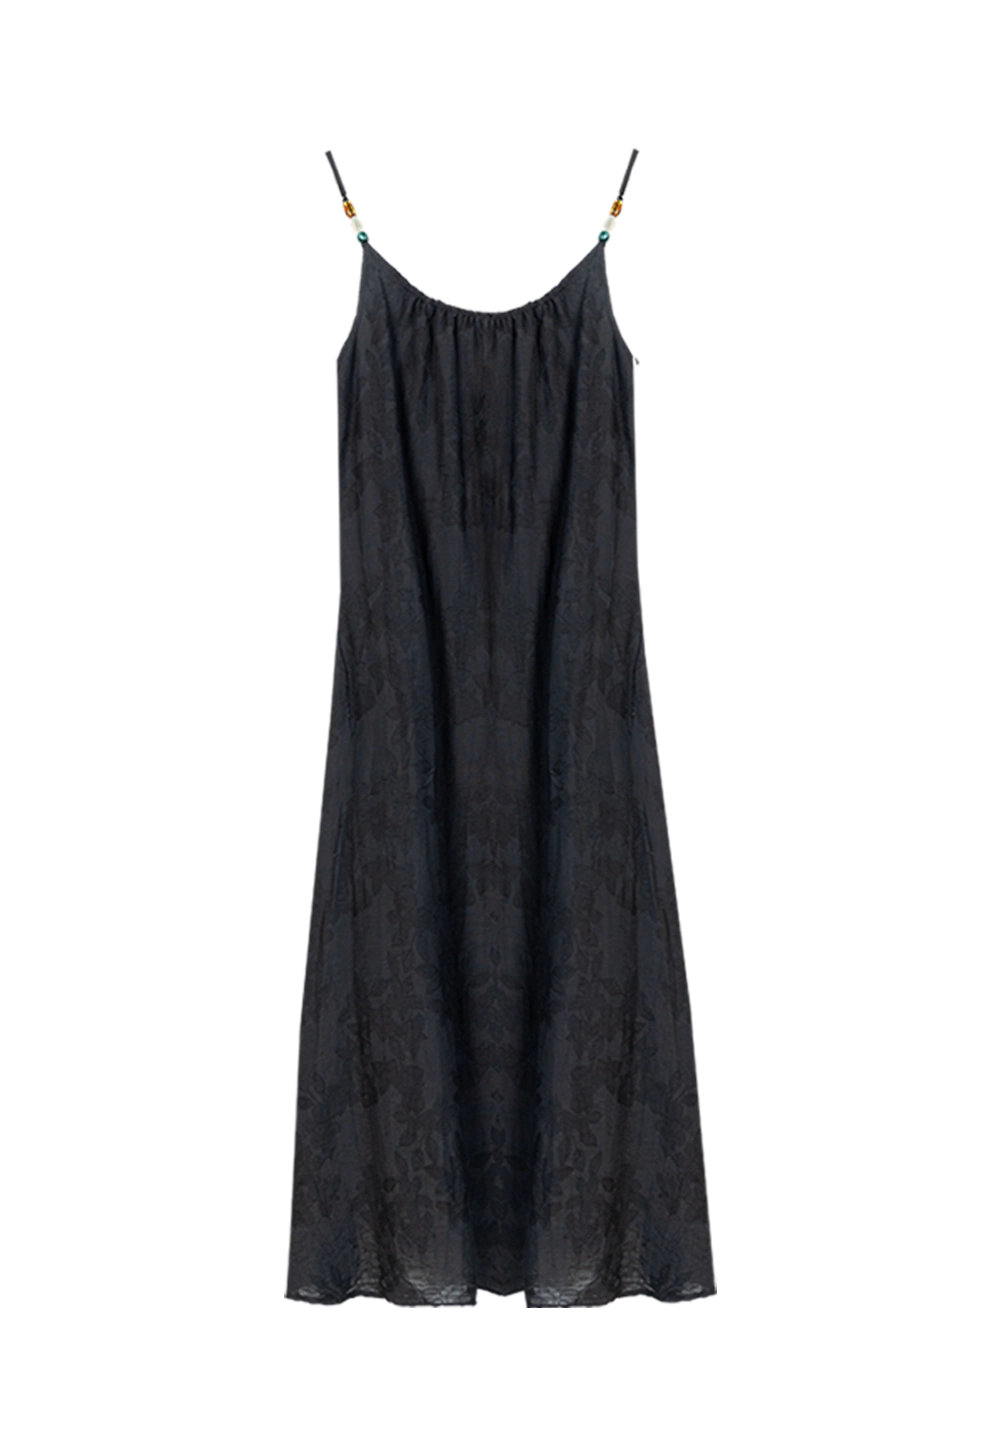 Beige Linen Maxi Dress with Adjustable Gemstone Straps - Elegant Bohemian Style